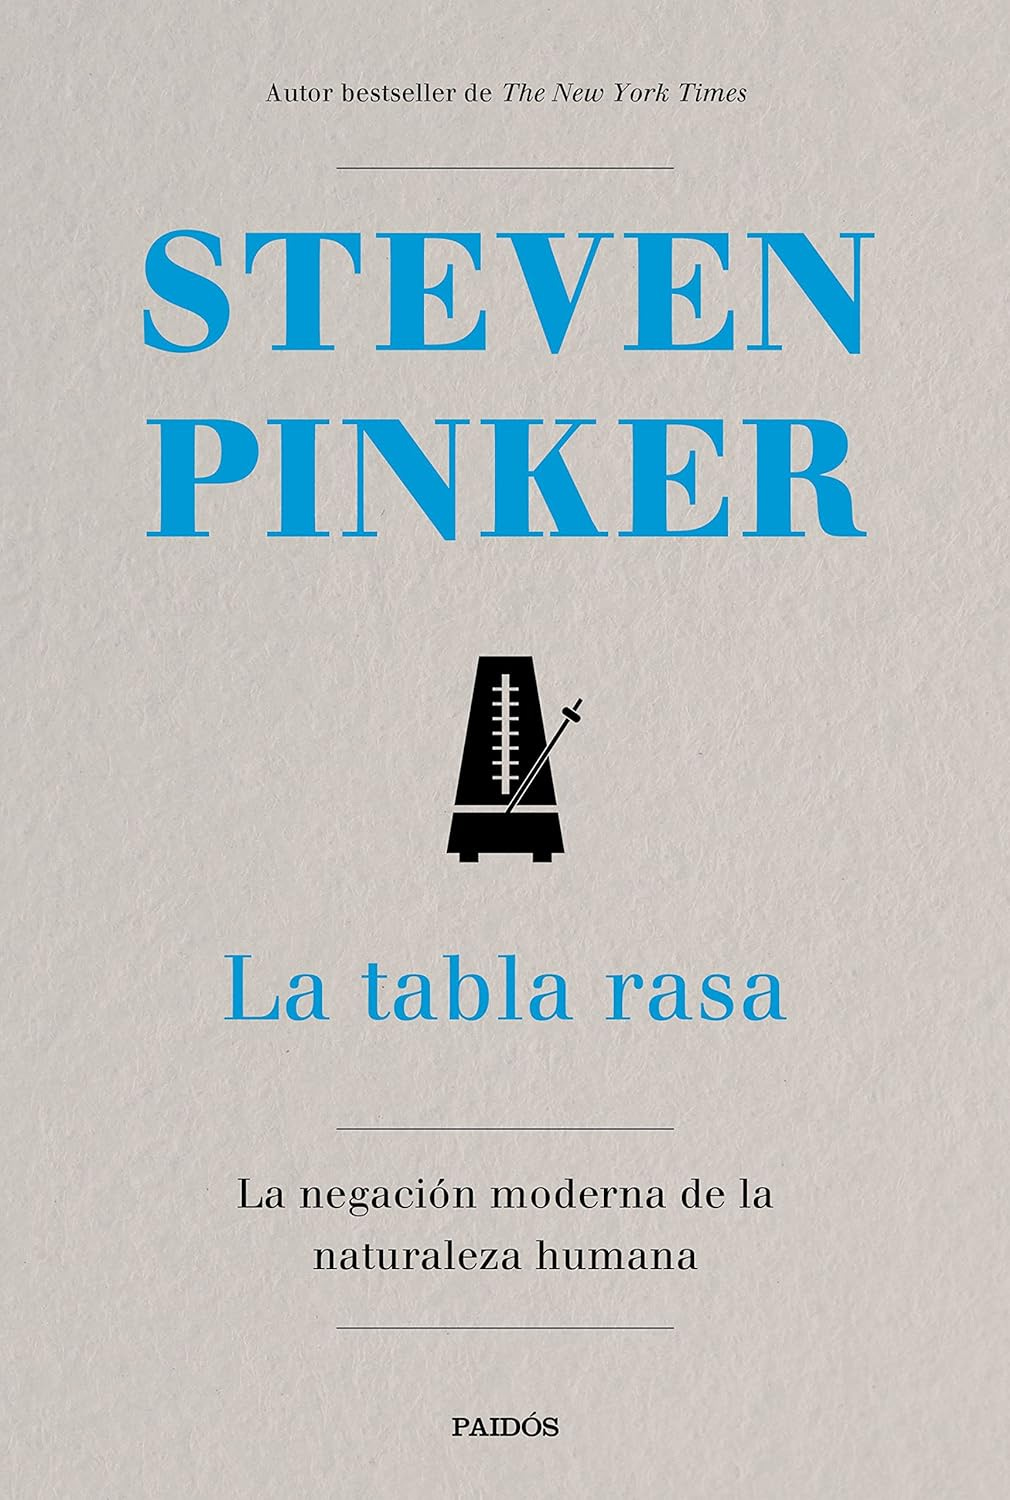 La tabla rasa: La negación moderna de la naturaleza humana de Steven Pinker